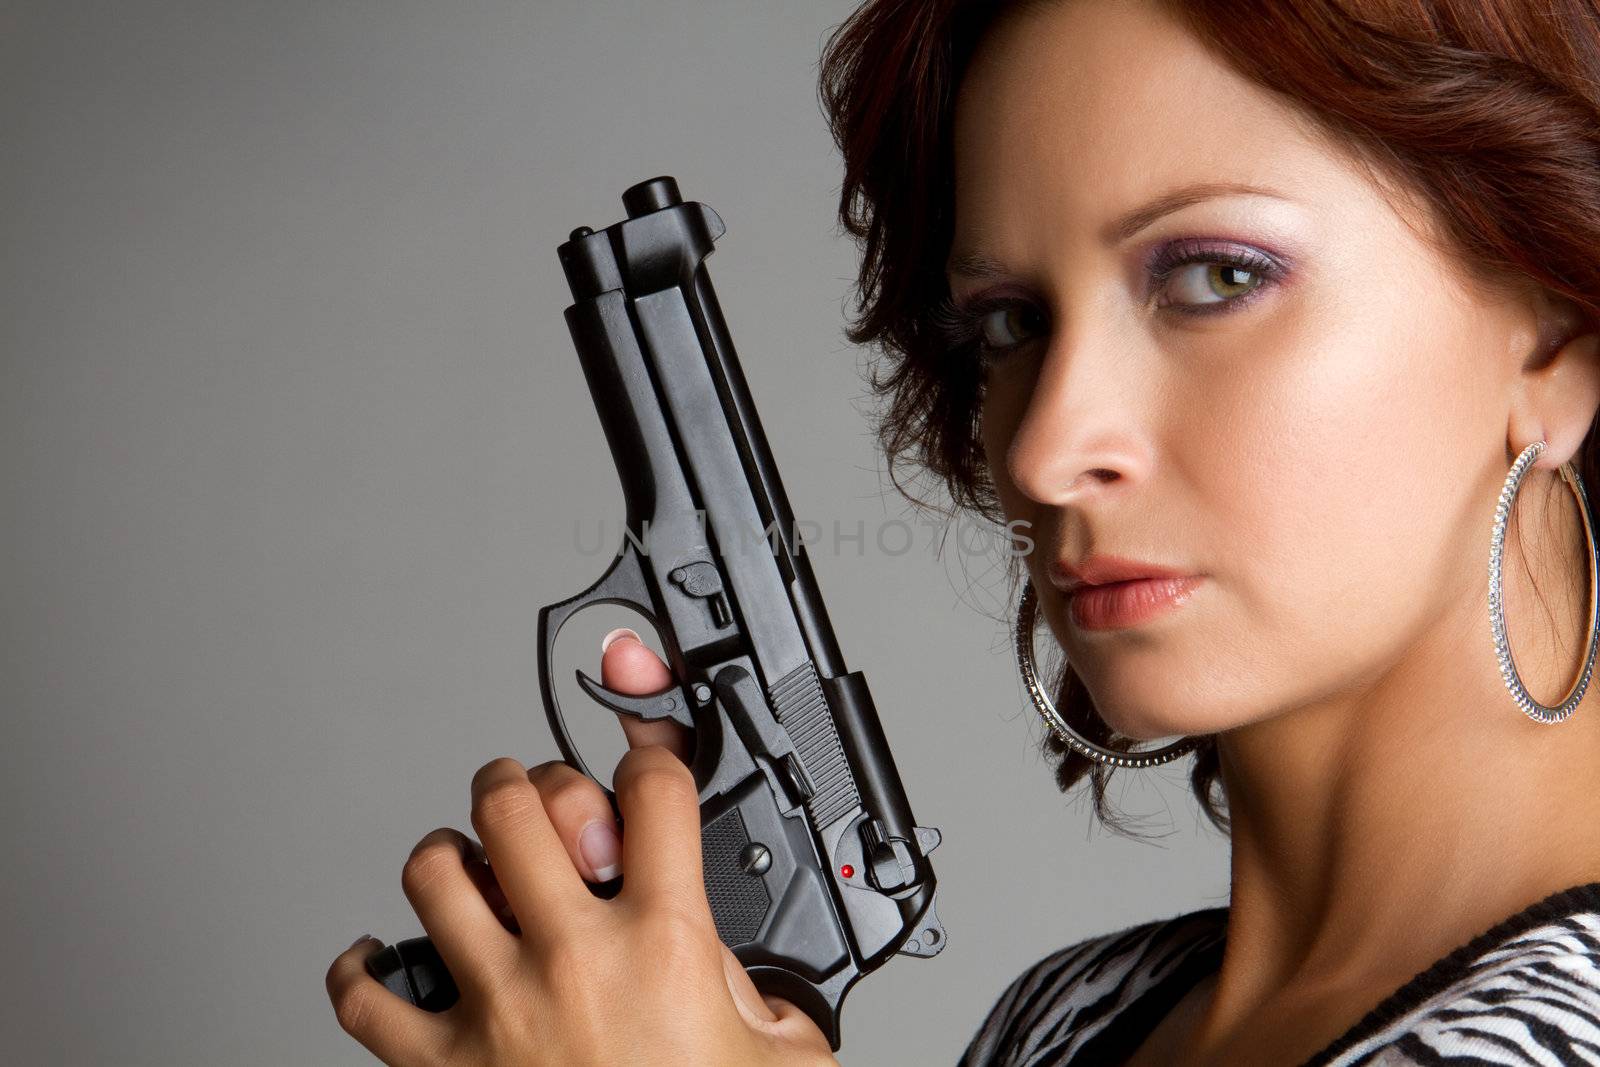 Sexy woman holding hand gun